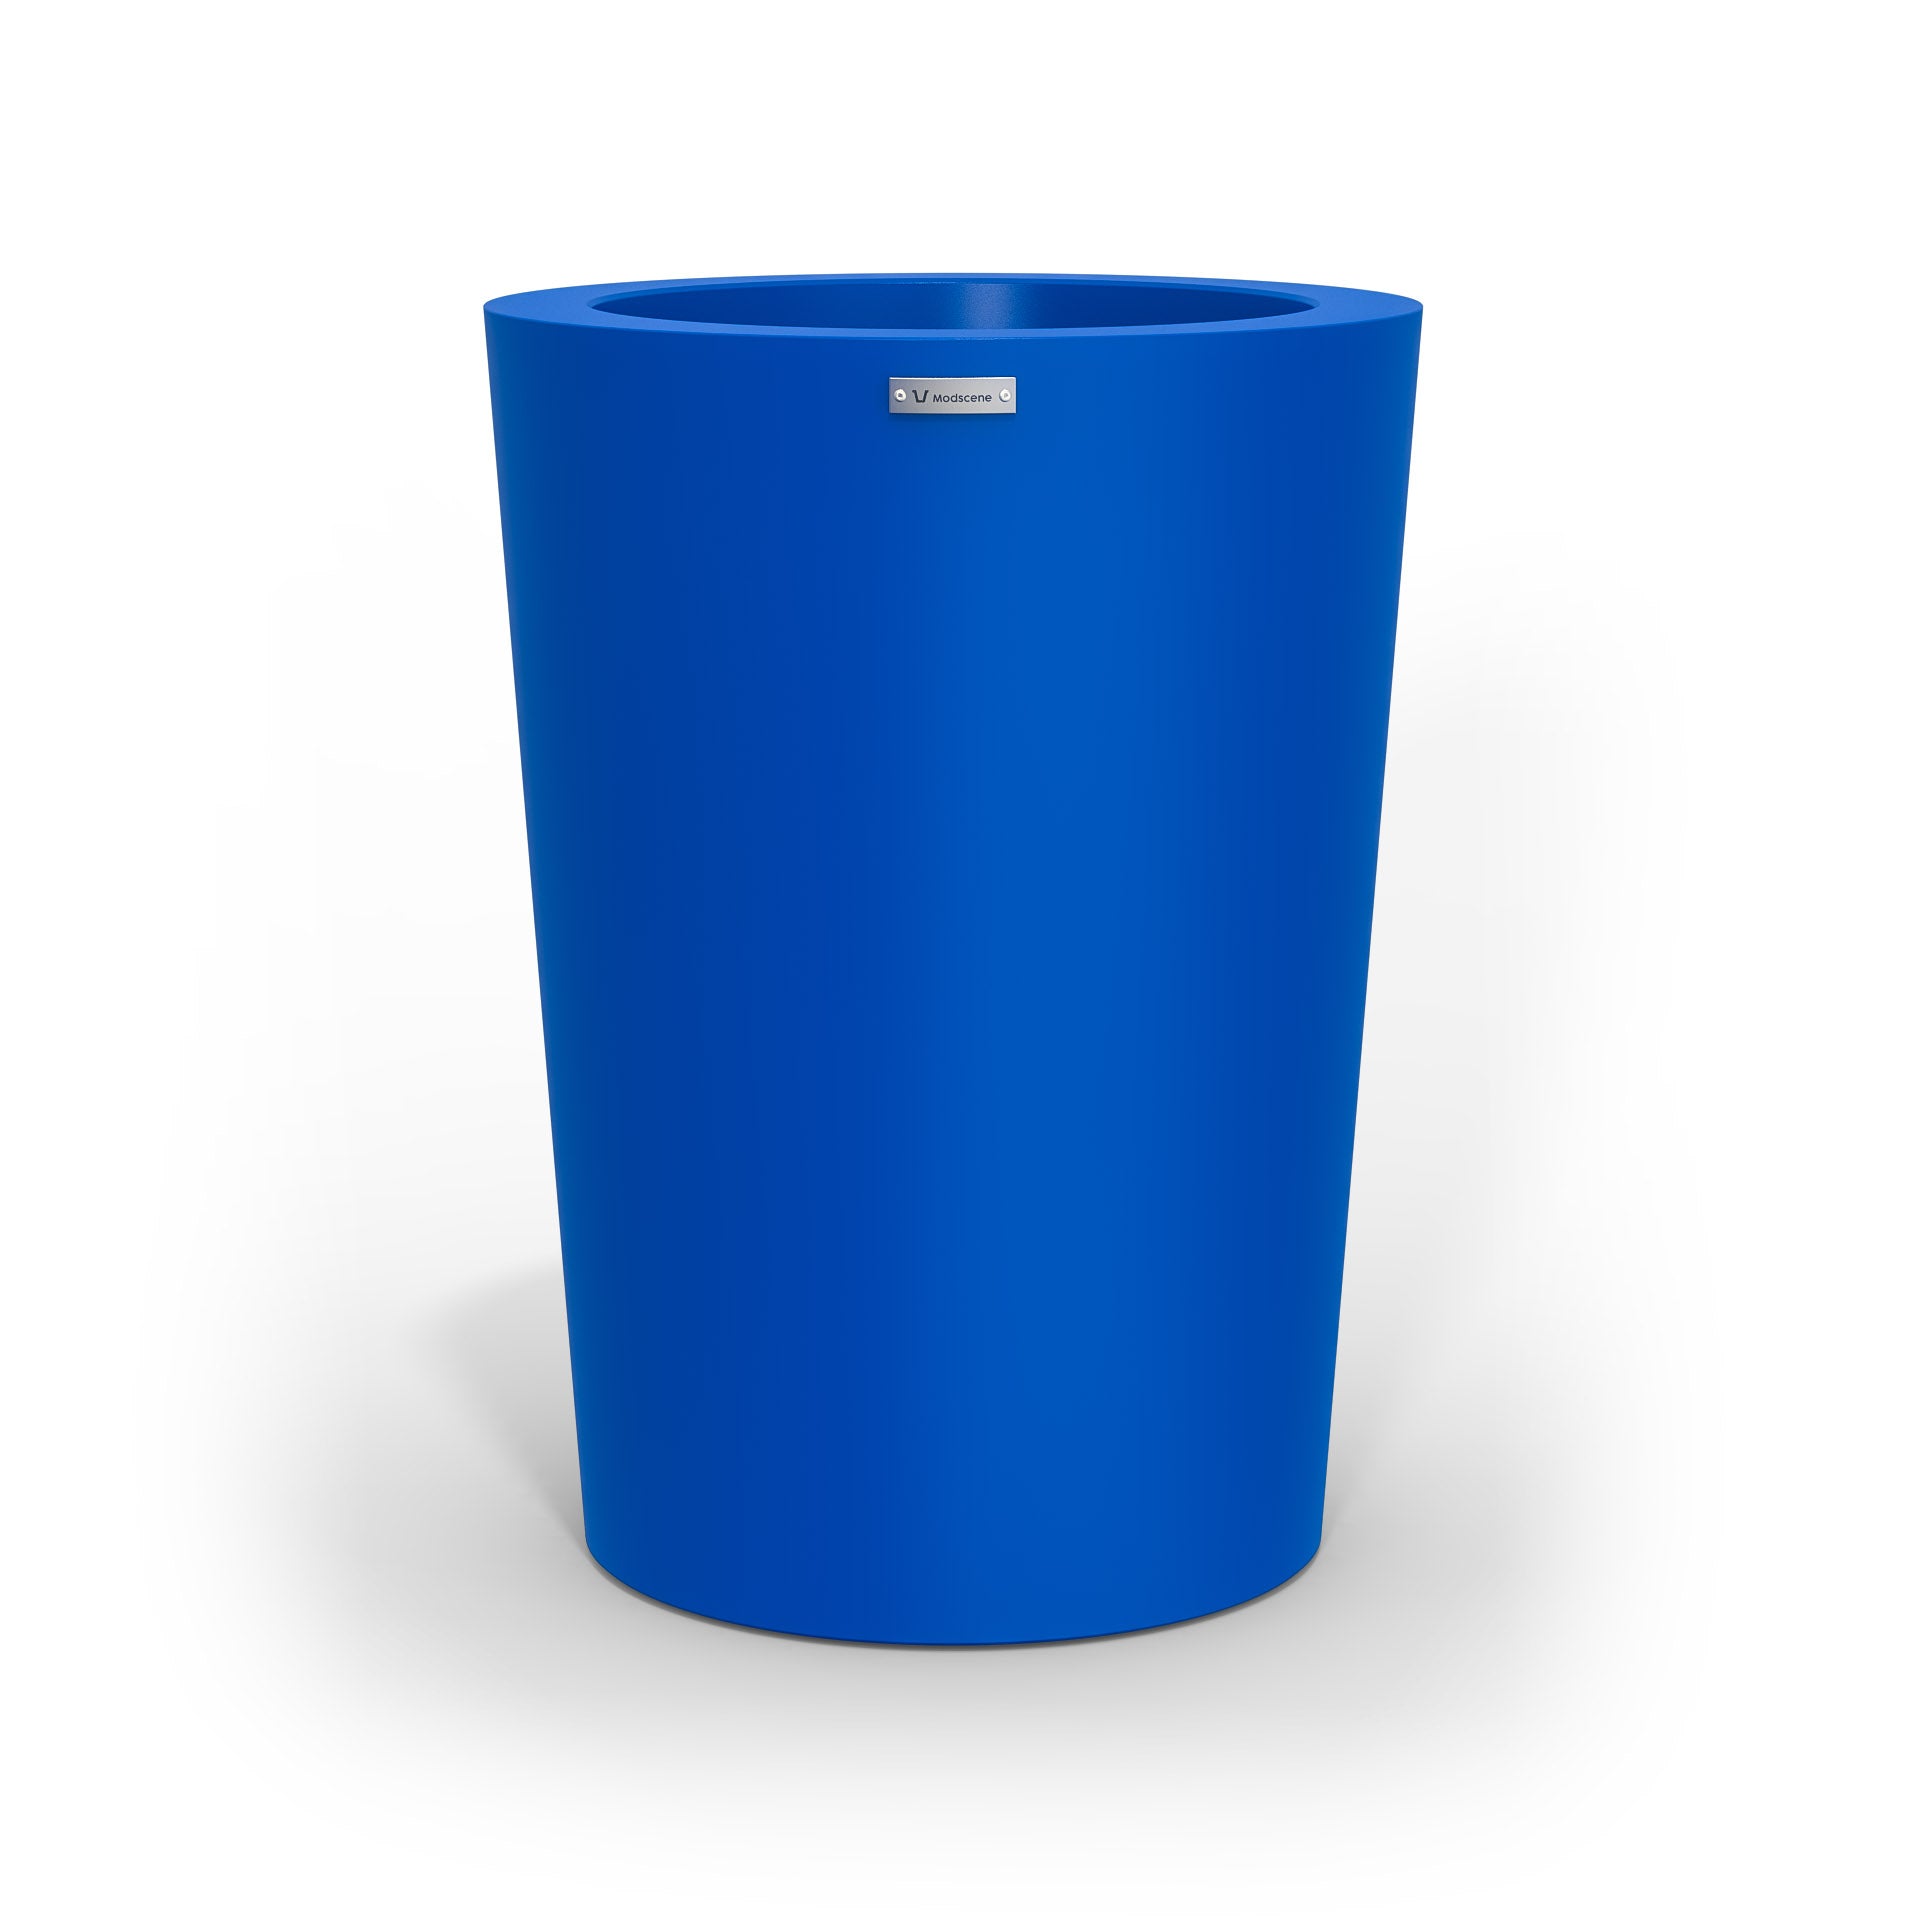 A modern style planter pot in a deep blue colour. Made by Modscene NZ.